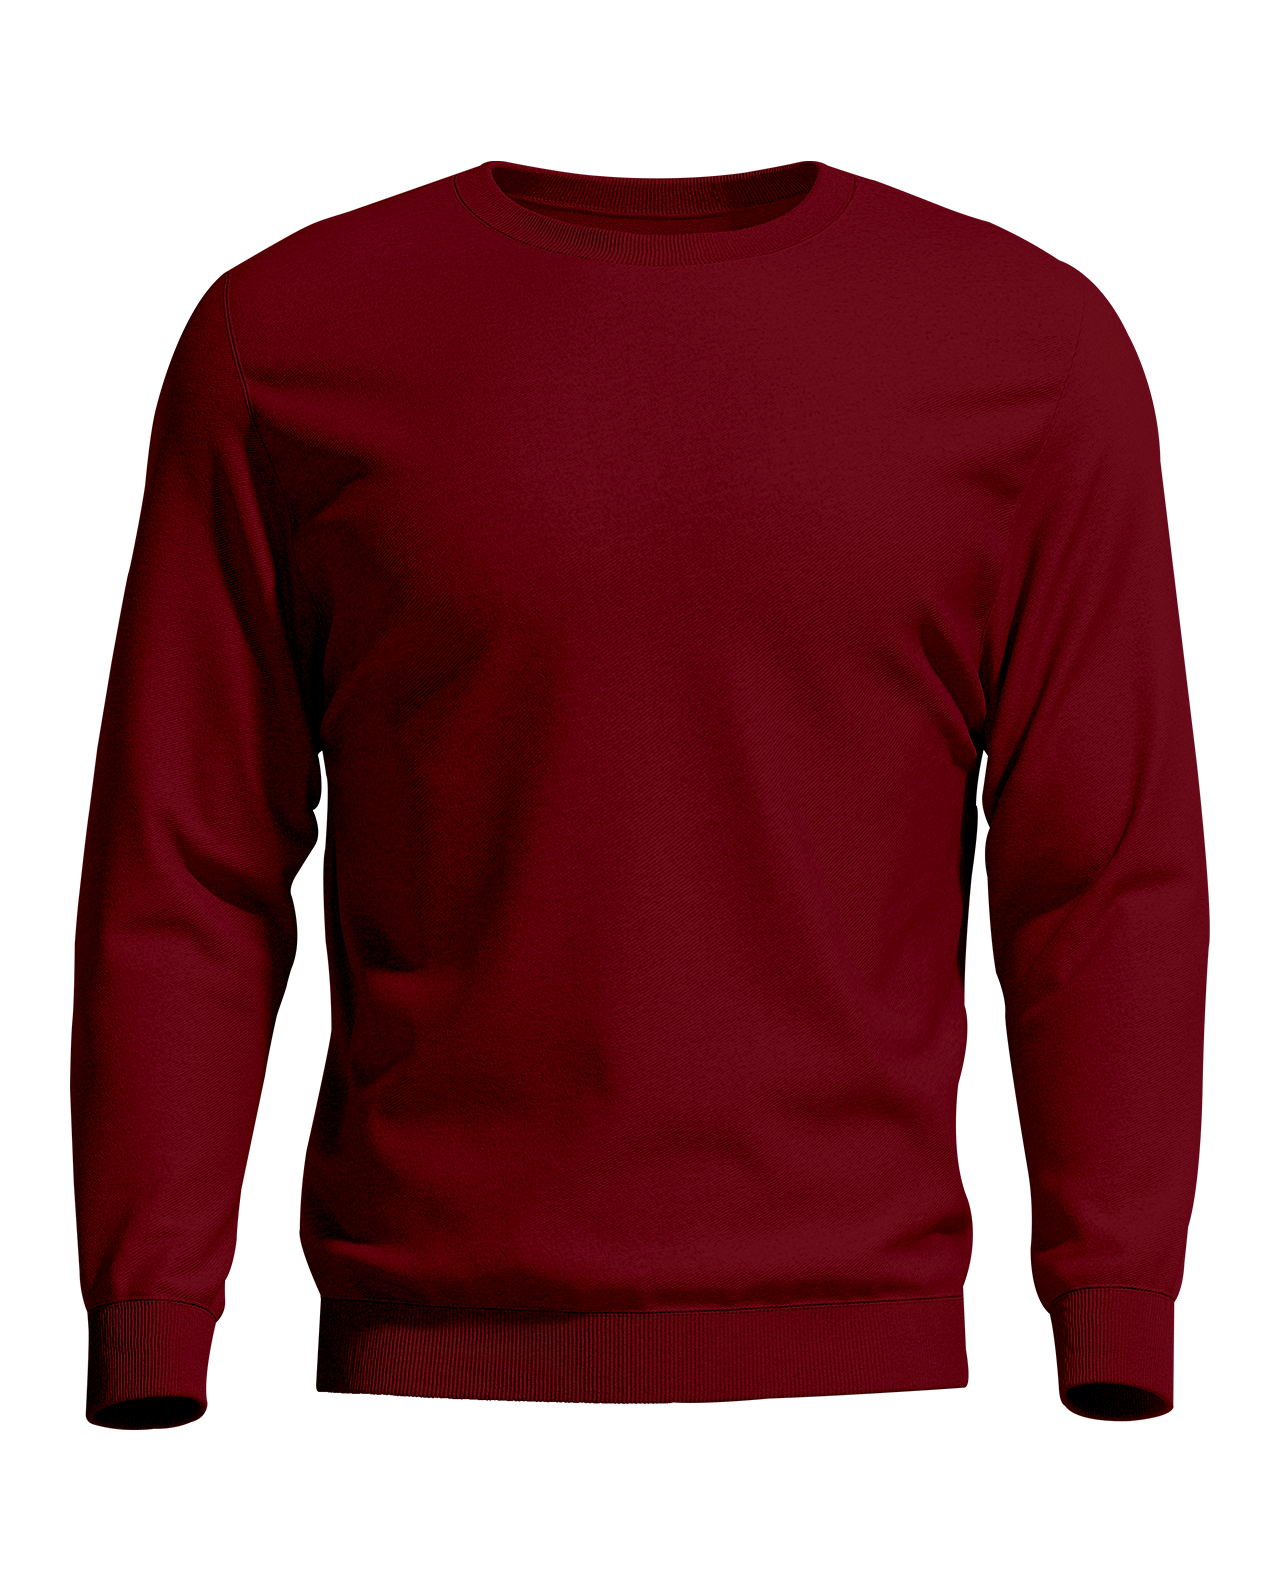 Trinizen Basics Sweatshirt